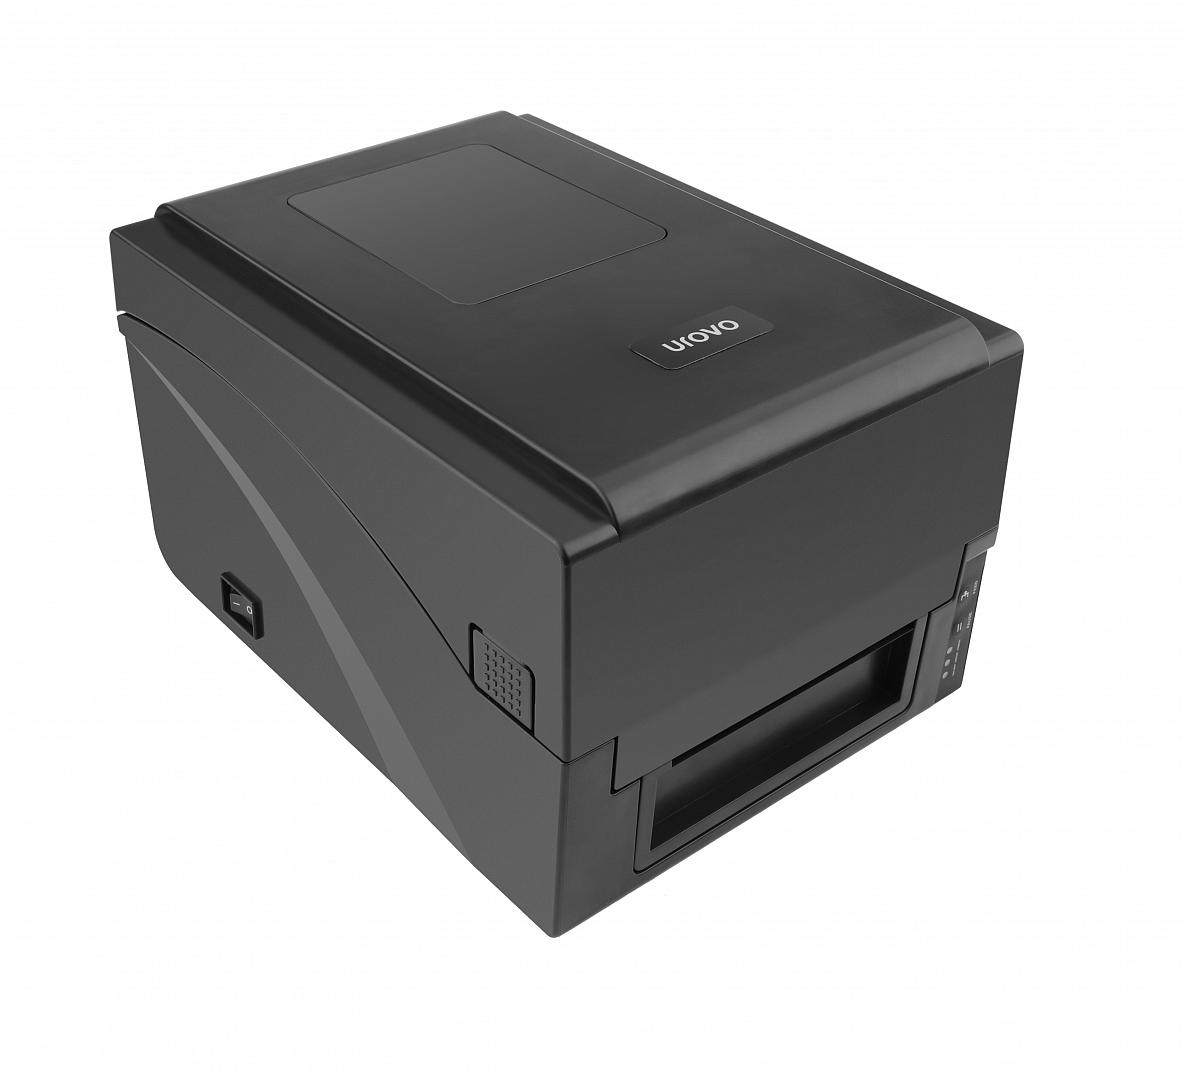 Принтер печати этикеток Urovo D7000 / D7000-A2203U1R1B1W1 / 203dpi+USB+RS232+com+Ethernet